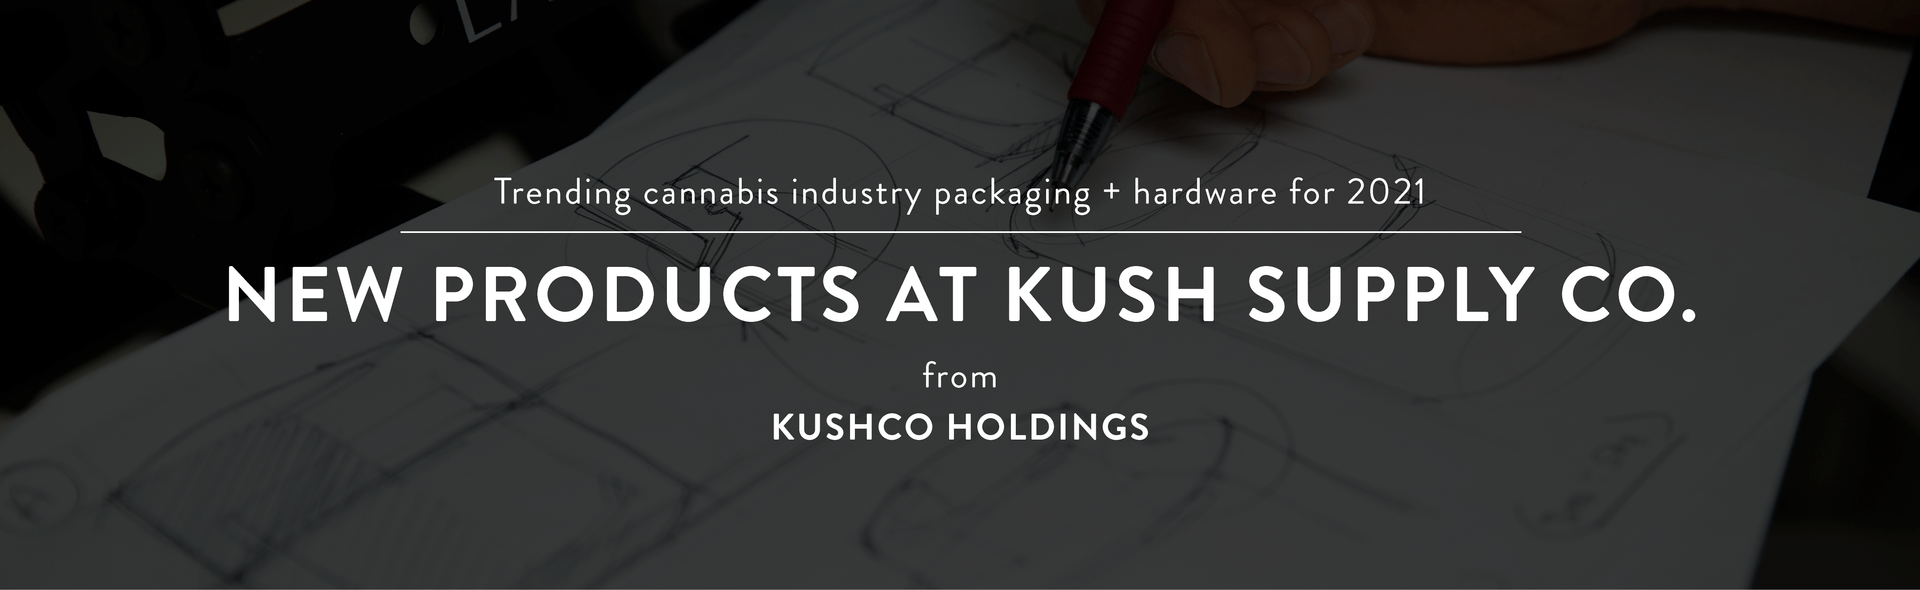 New Products at Kush Supply Co.